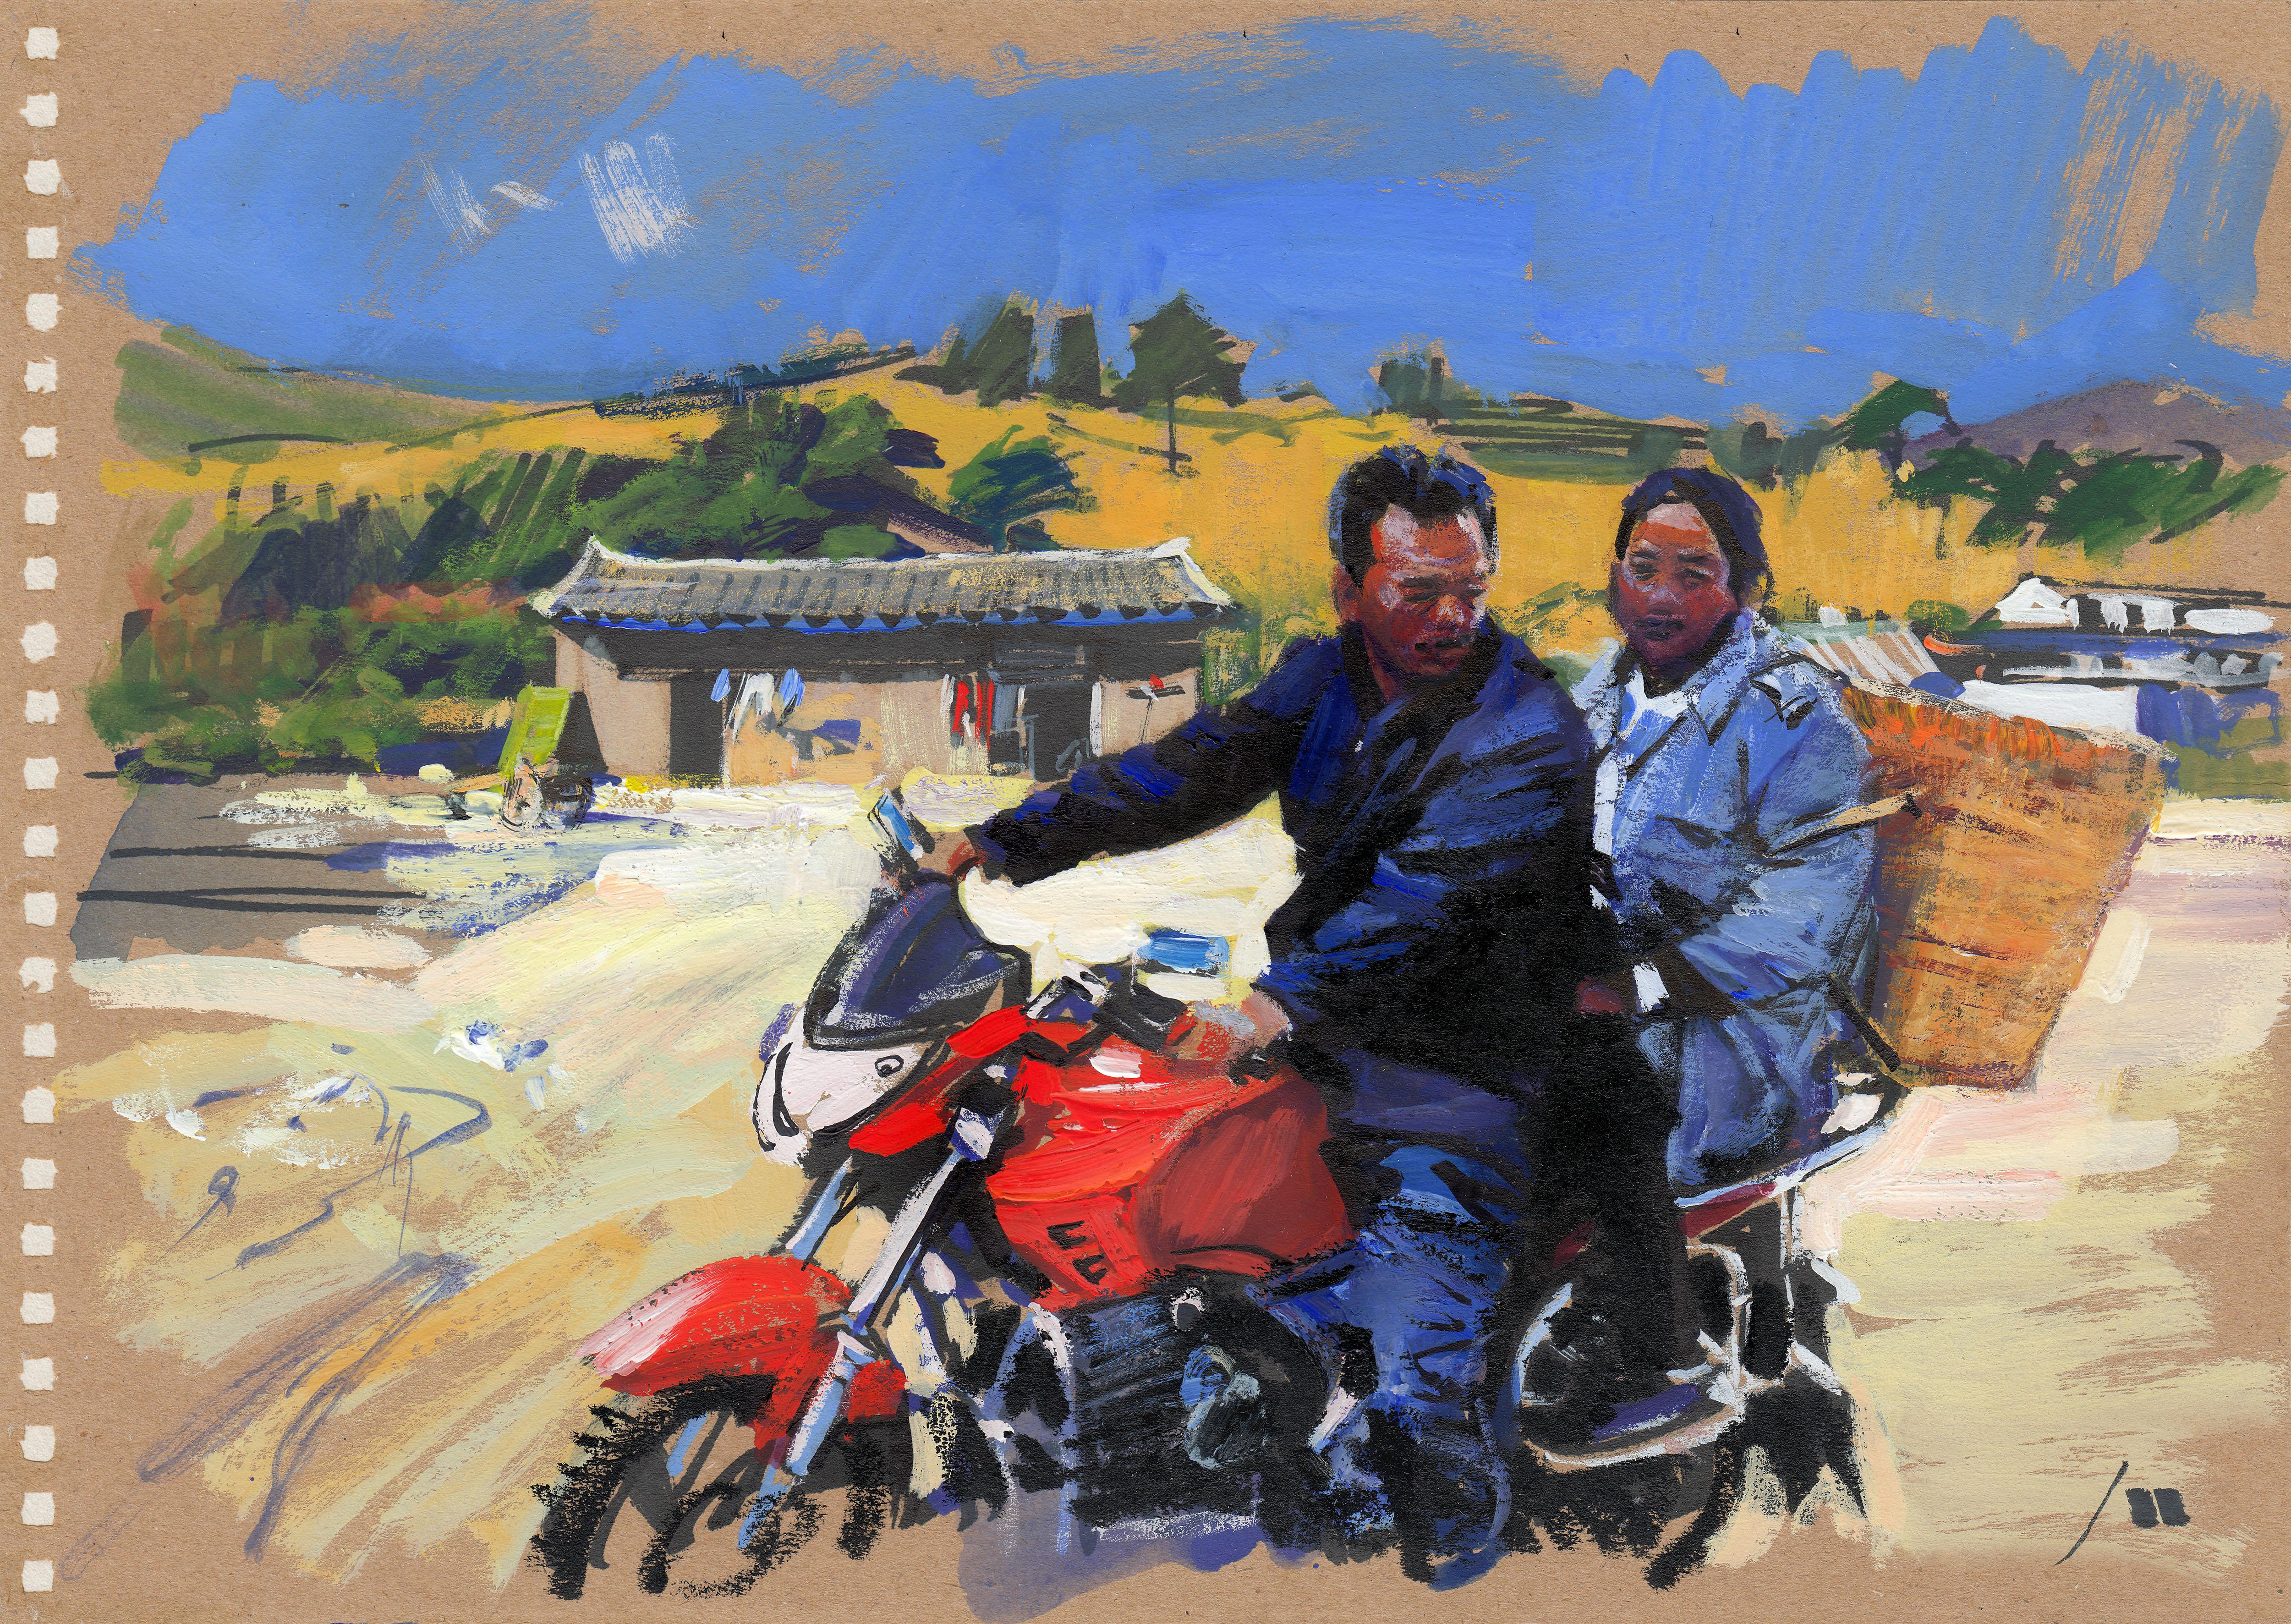 Evgeniy Monahov Figurative Art - Two on the road, Muli-Tibet County, China (sketch)